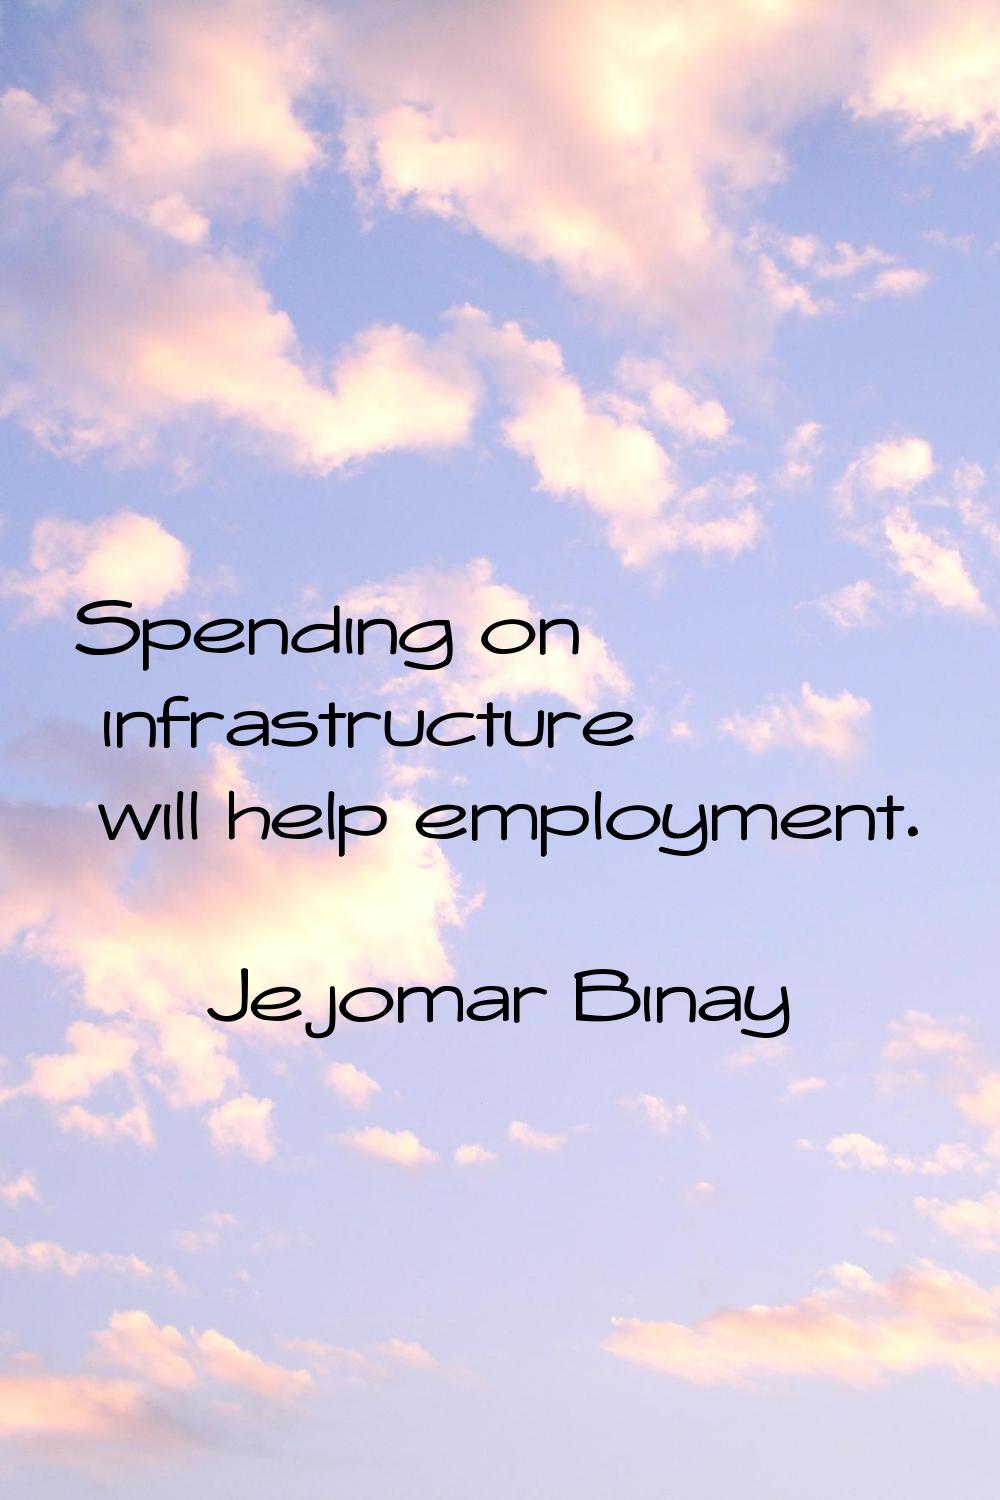 Spending on infrastructure will help employment.